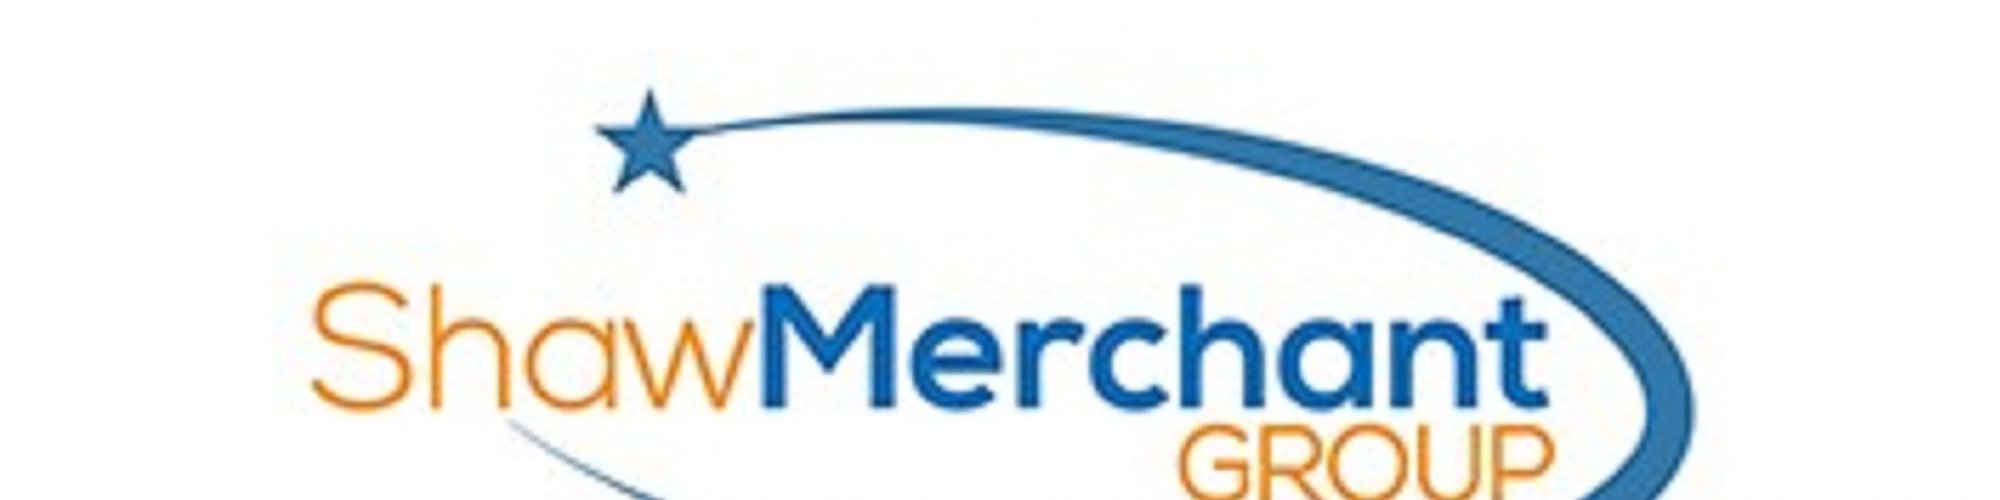 Shaw Merchant Group